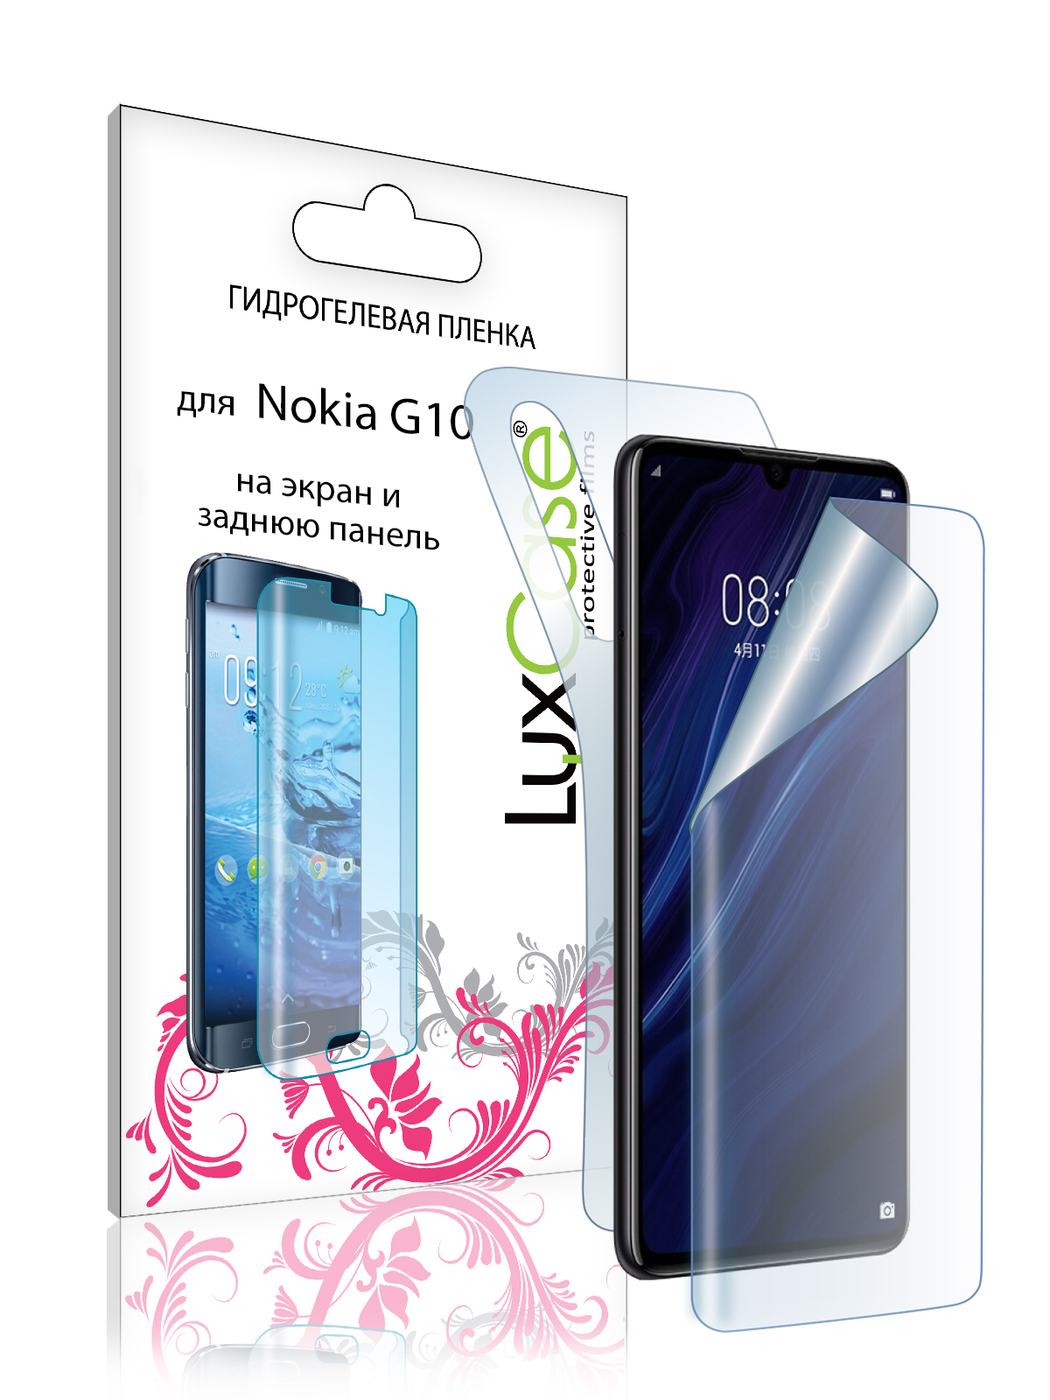 Пленка гидрогелевая LuxCase для Nokia G10 Front and Back Transparent 86391 гидрогелевая пленка luxcase для nokia g10 back transparent 86390